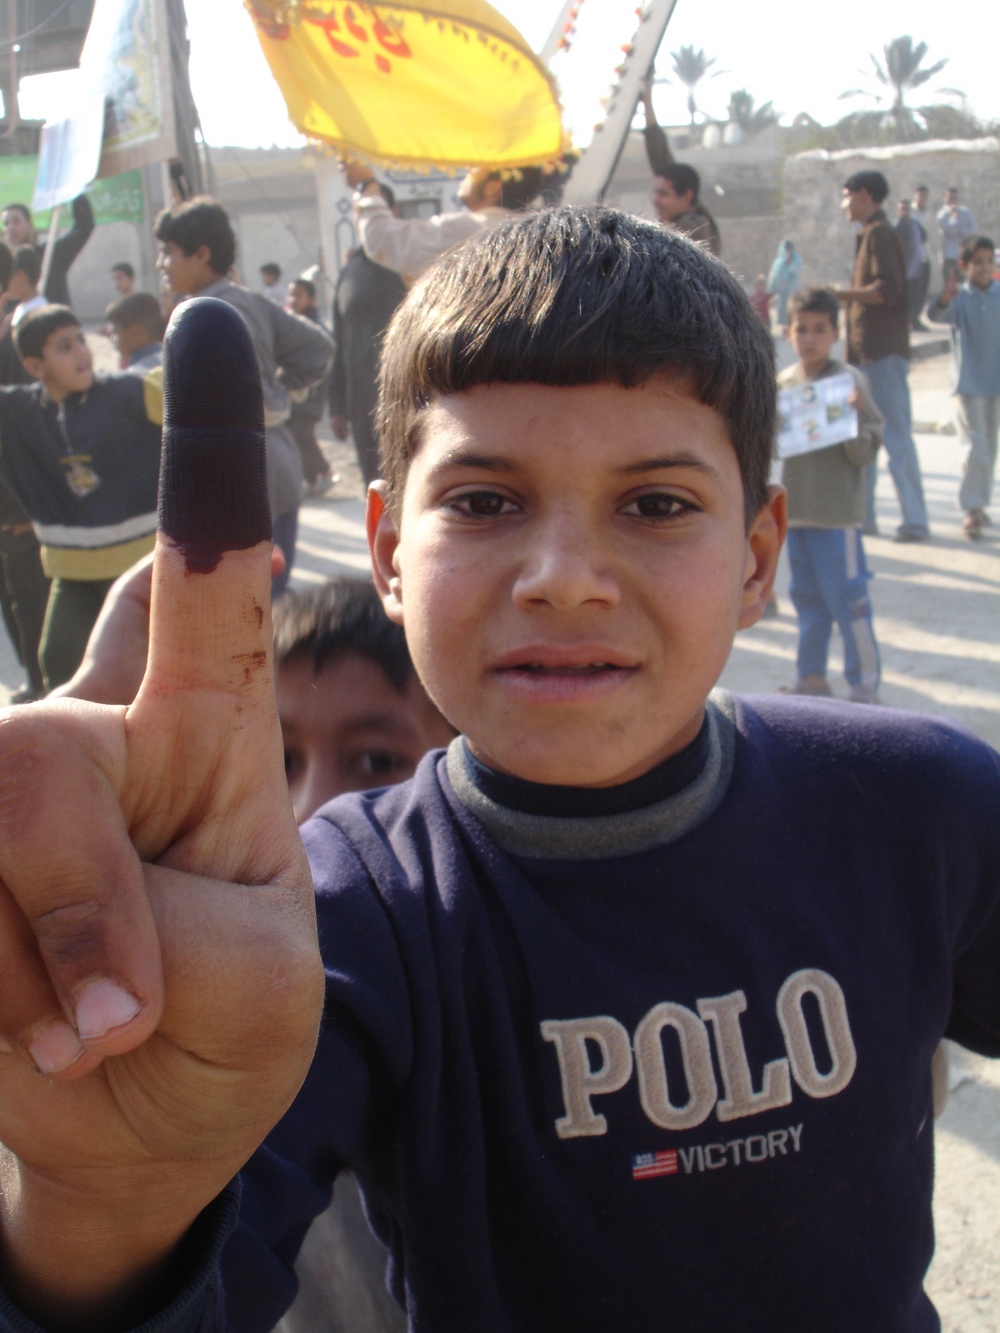 Iraqi election